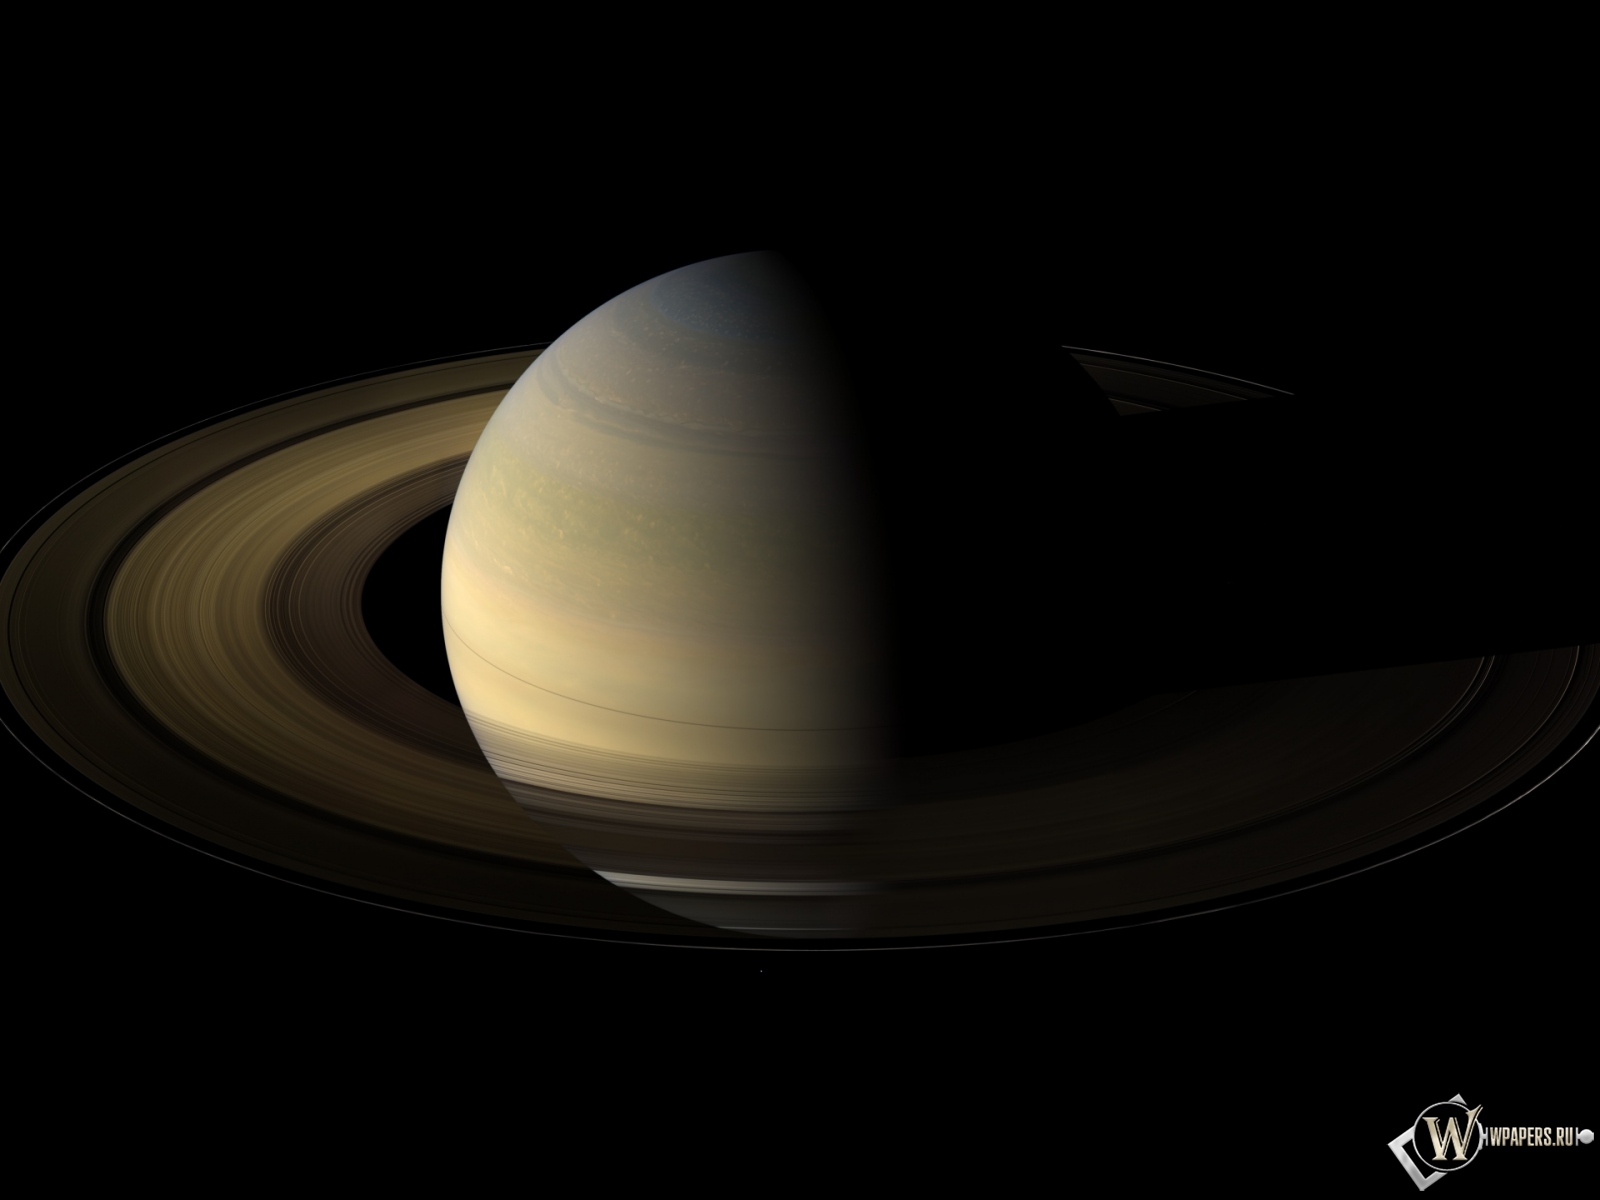 Кольца Сатурна 1600x1200